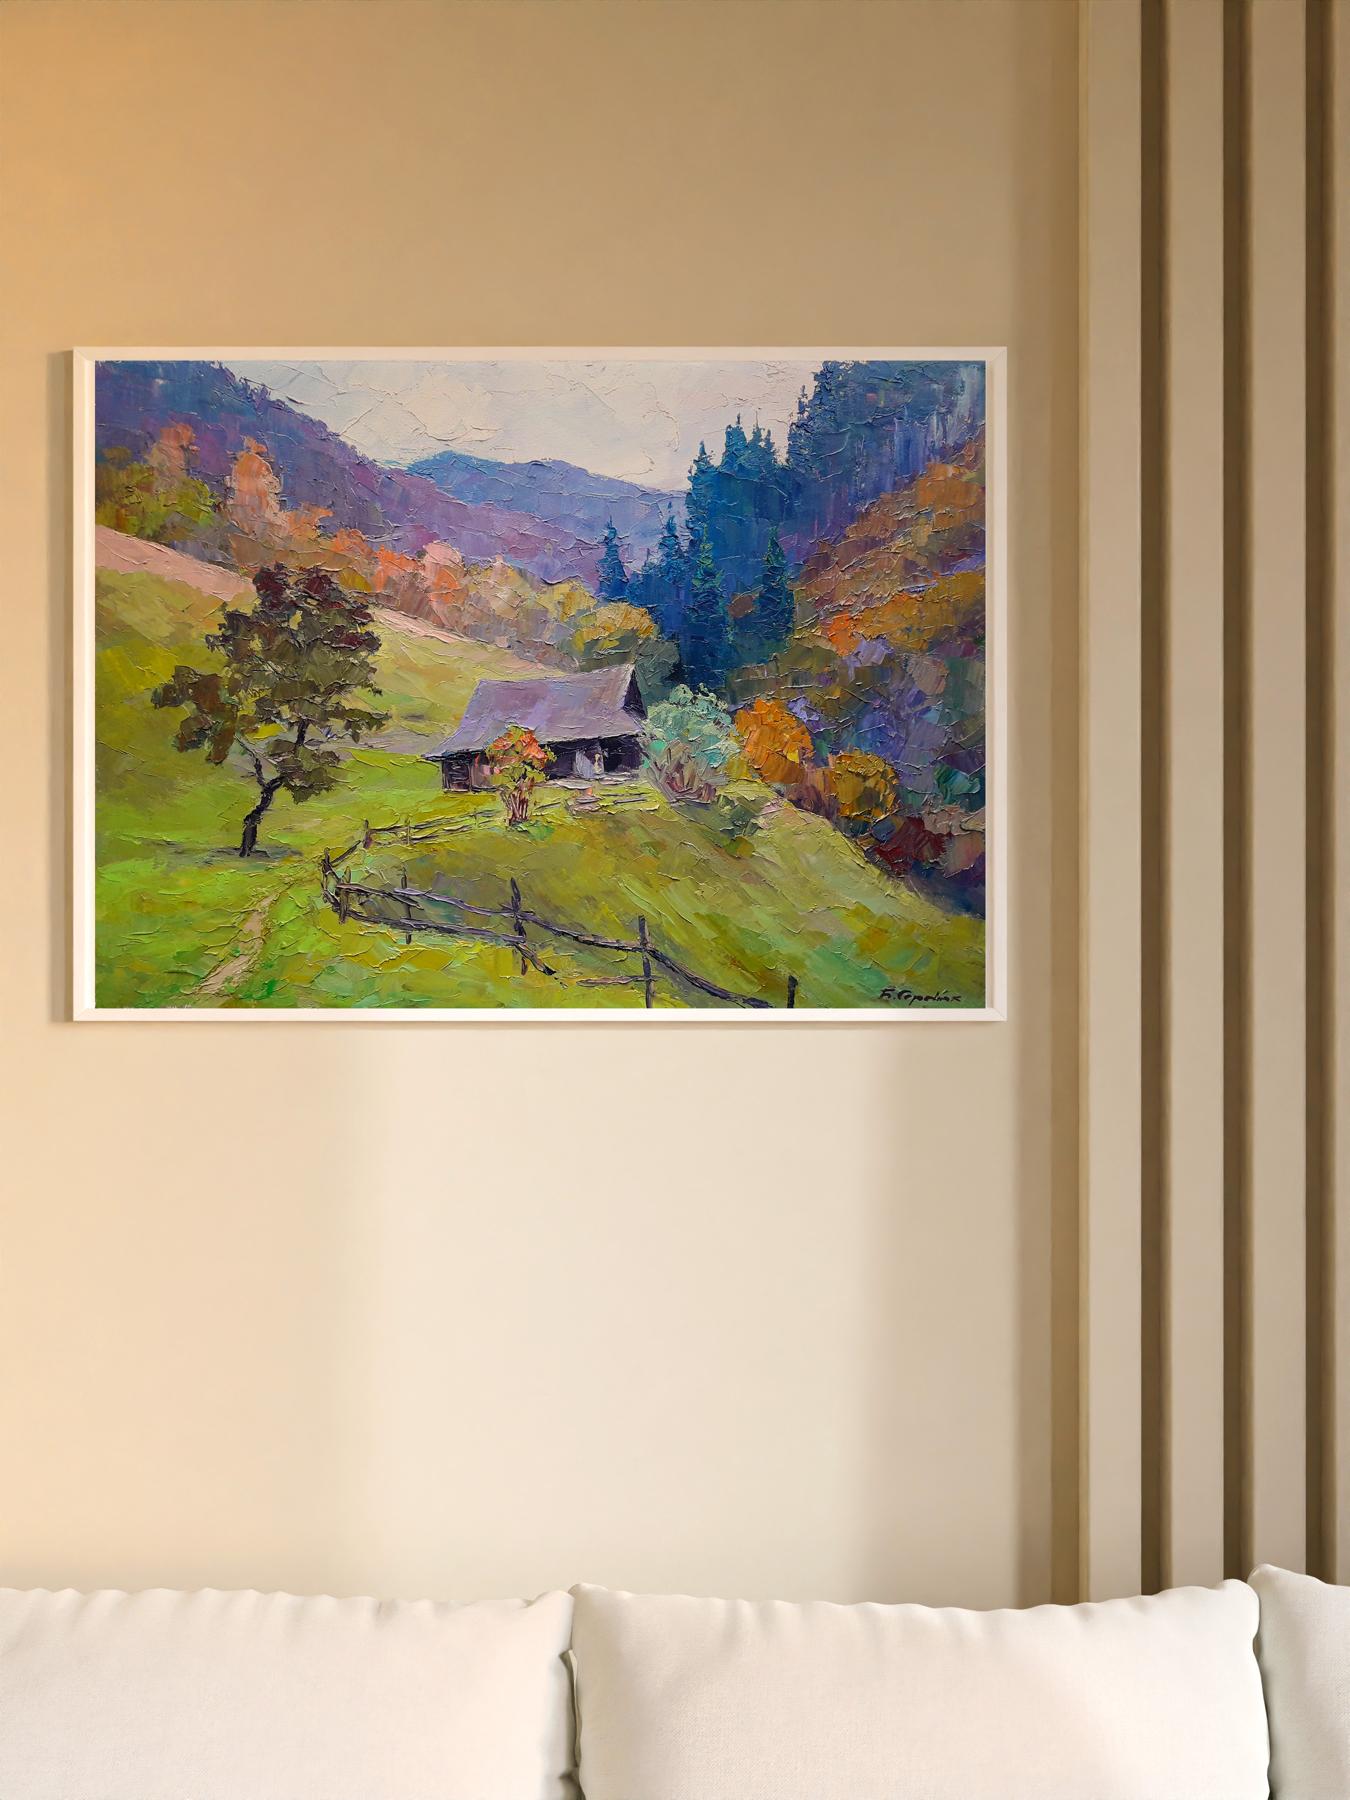 Boris Petrovich Serdyuk's oil painting captures the vibrant hues of the Carpathian Mountains